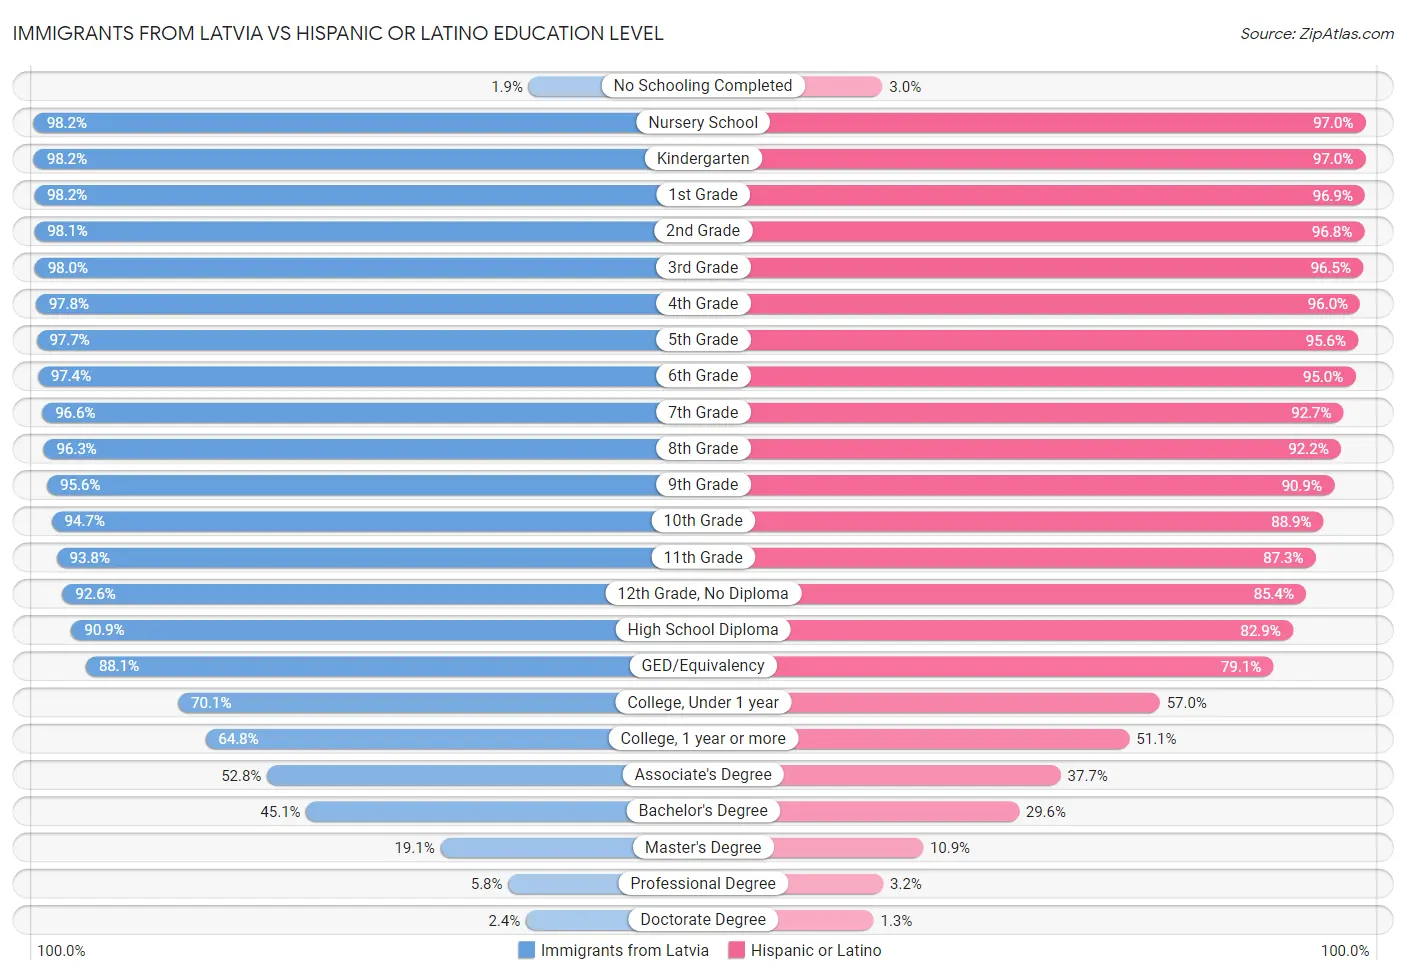 Immigrants from Latvia vs Hispanic or Latino Education Level